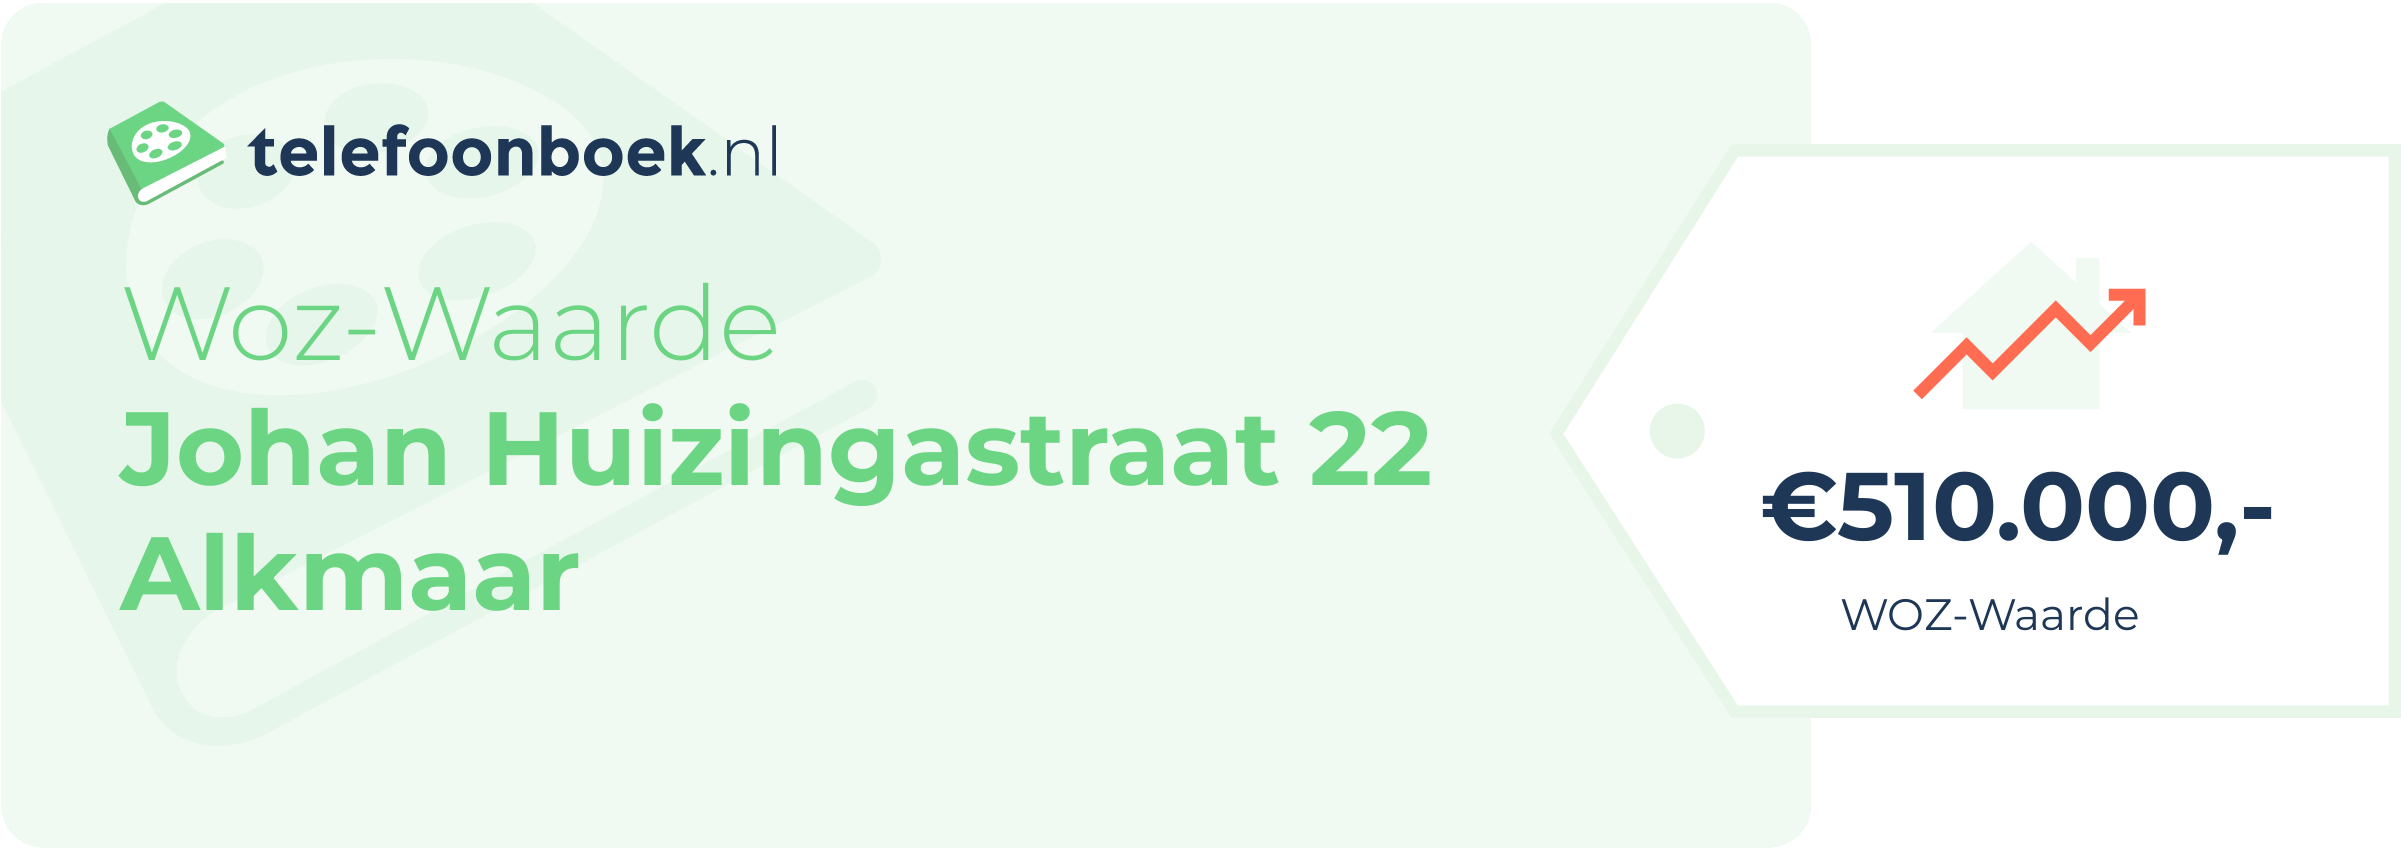 WOZ-waarde Johan Huizingastraat 22 Alkmaar